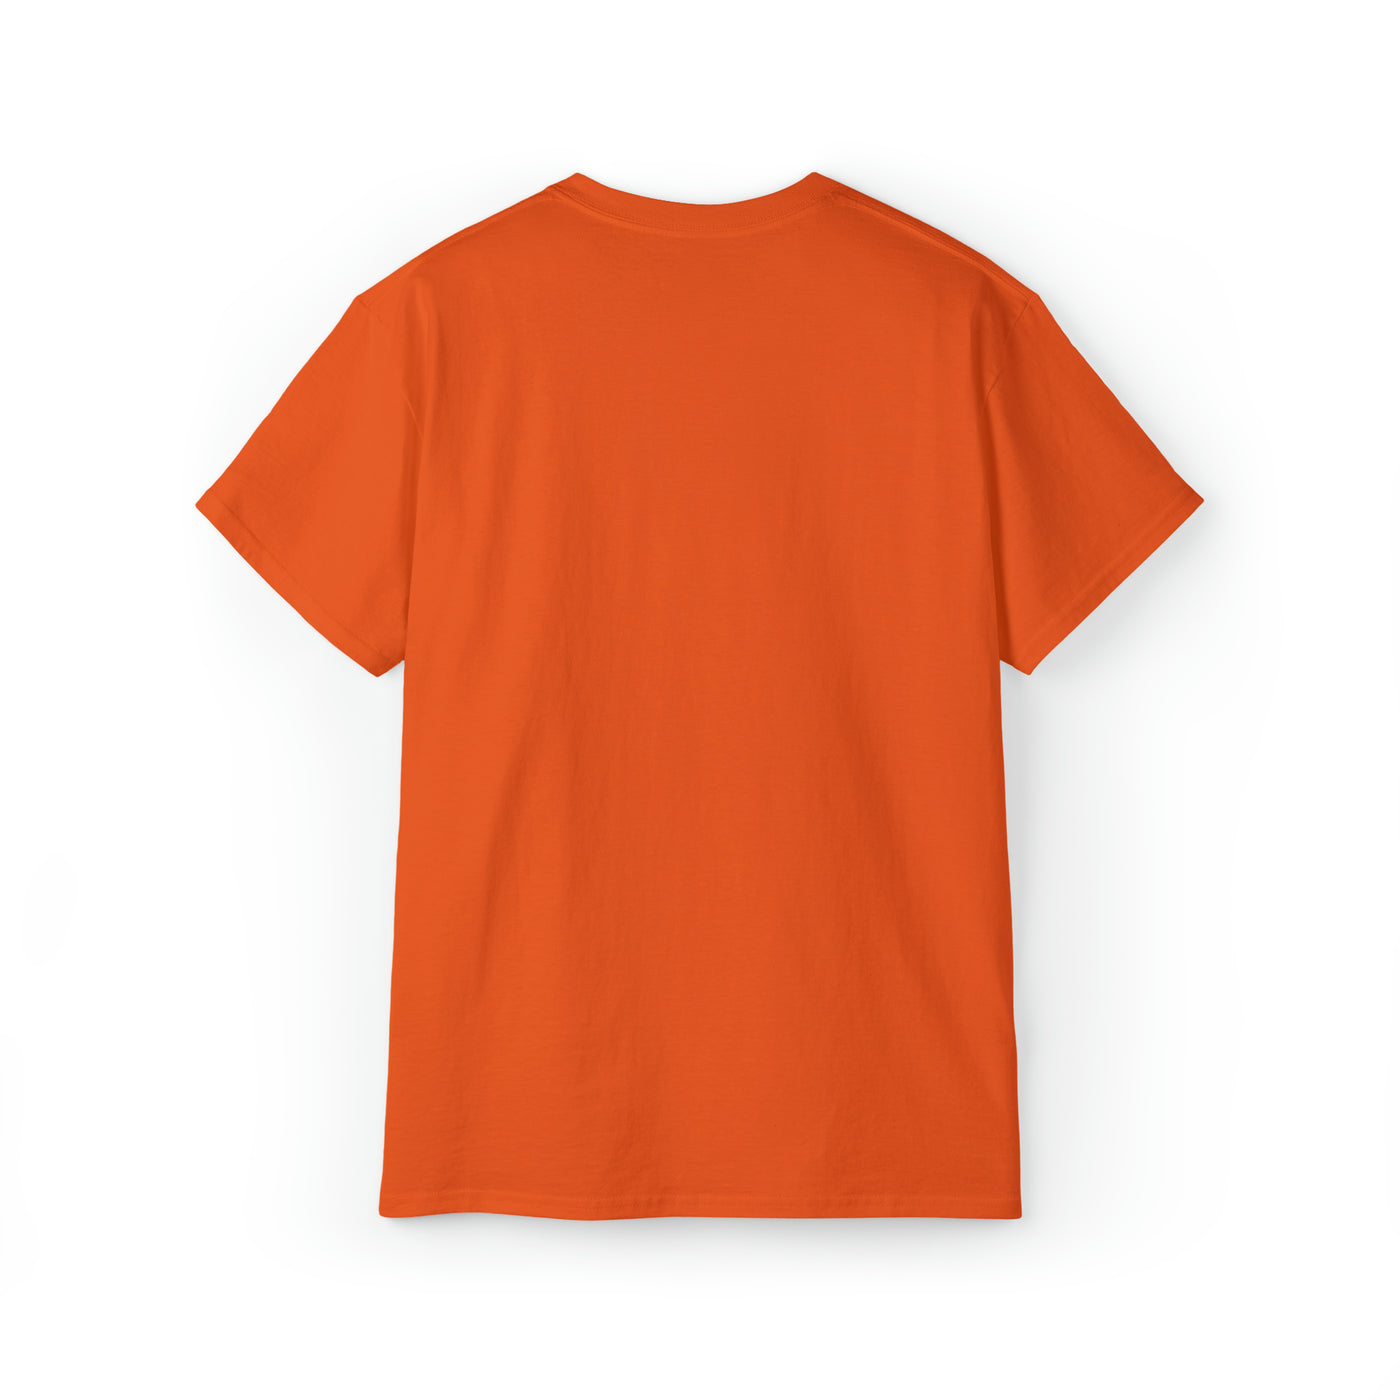 GPAA 1968 Retro T-Shirt